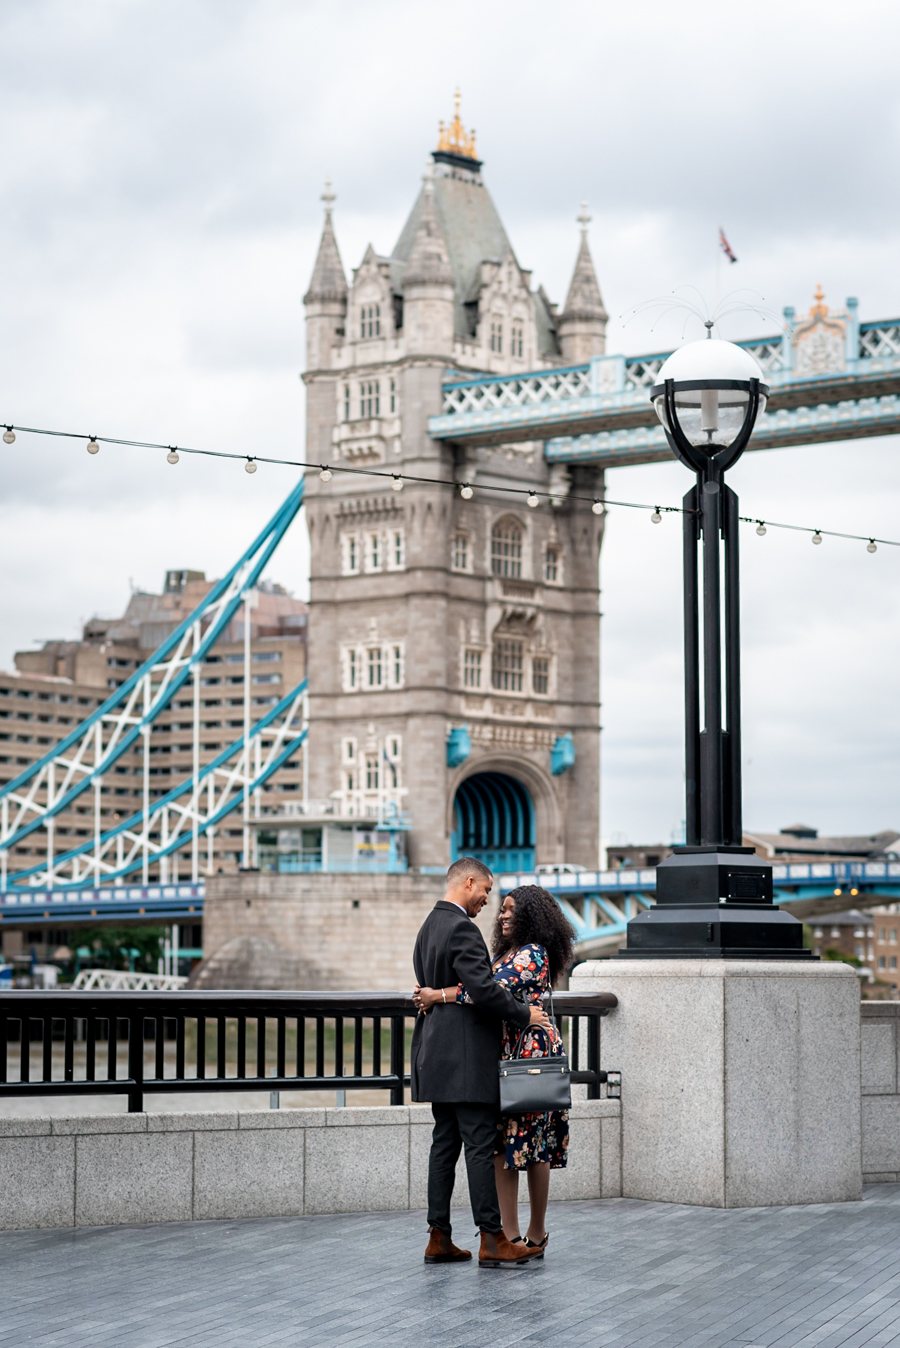 Akinwale & Oluwaseun's dream proposal in London, captured on camera by Matt Badenoch Photography (1)